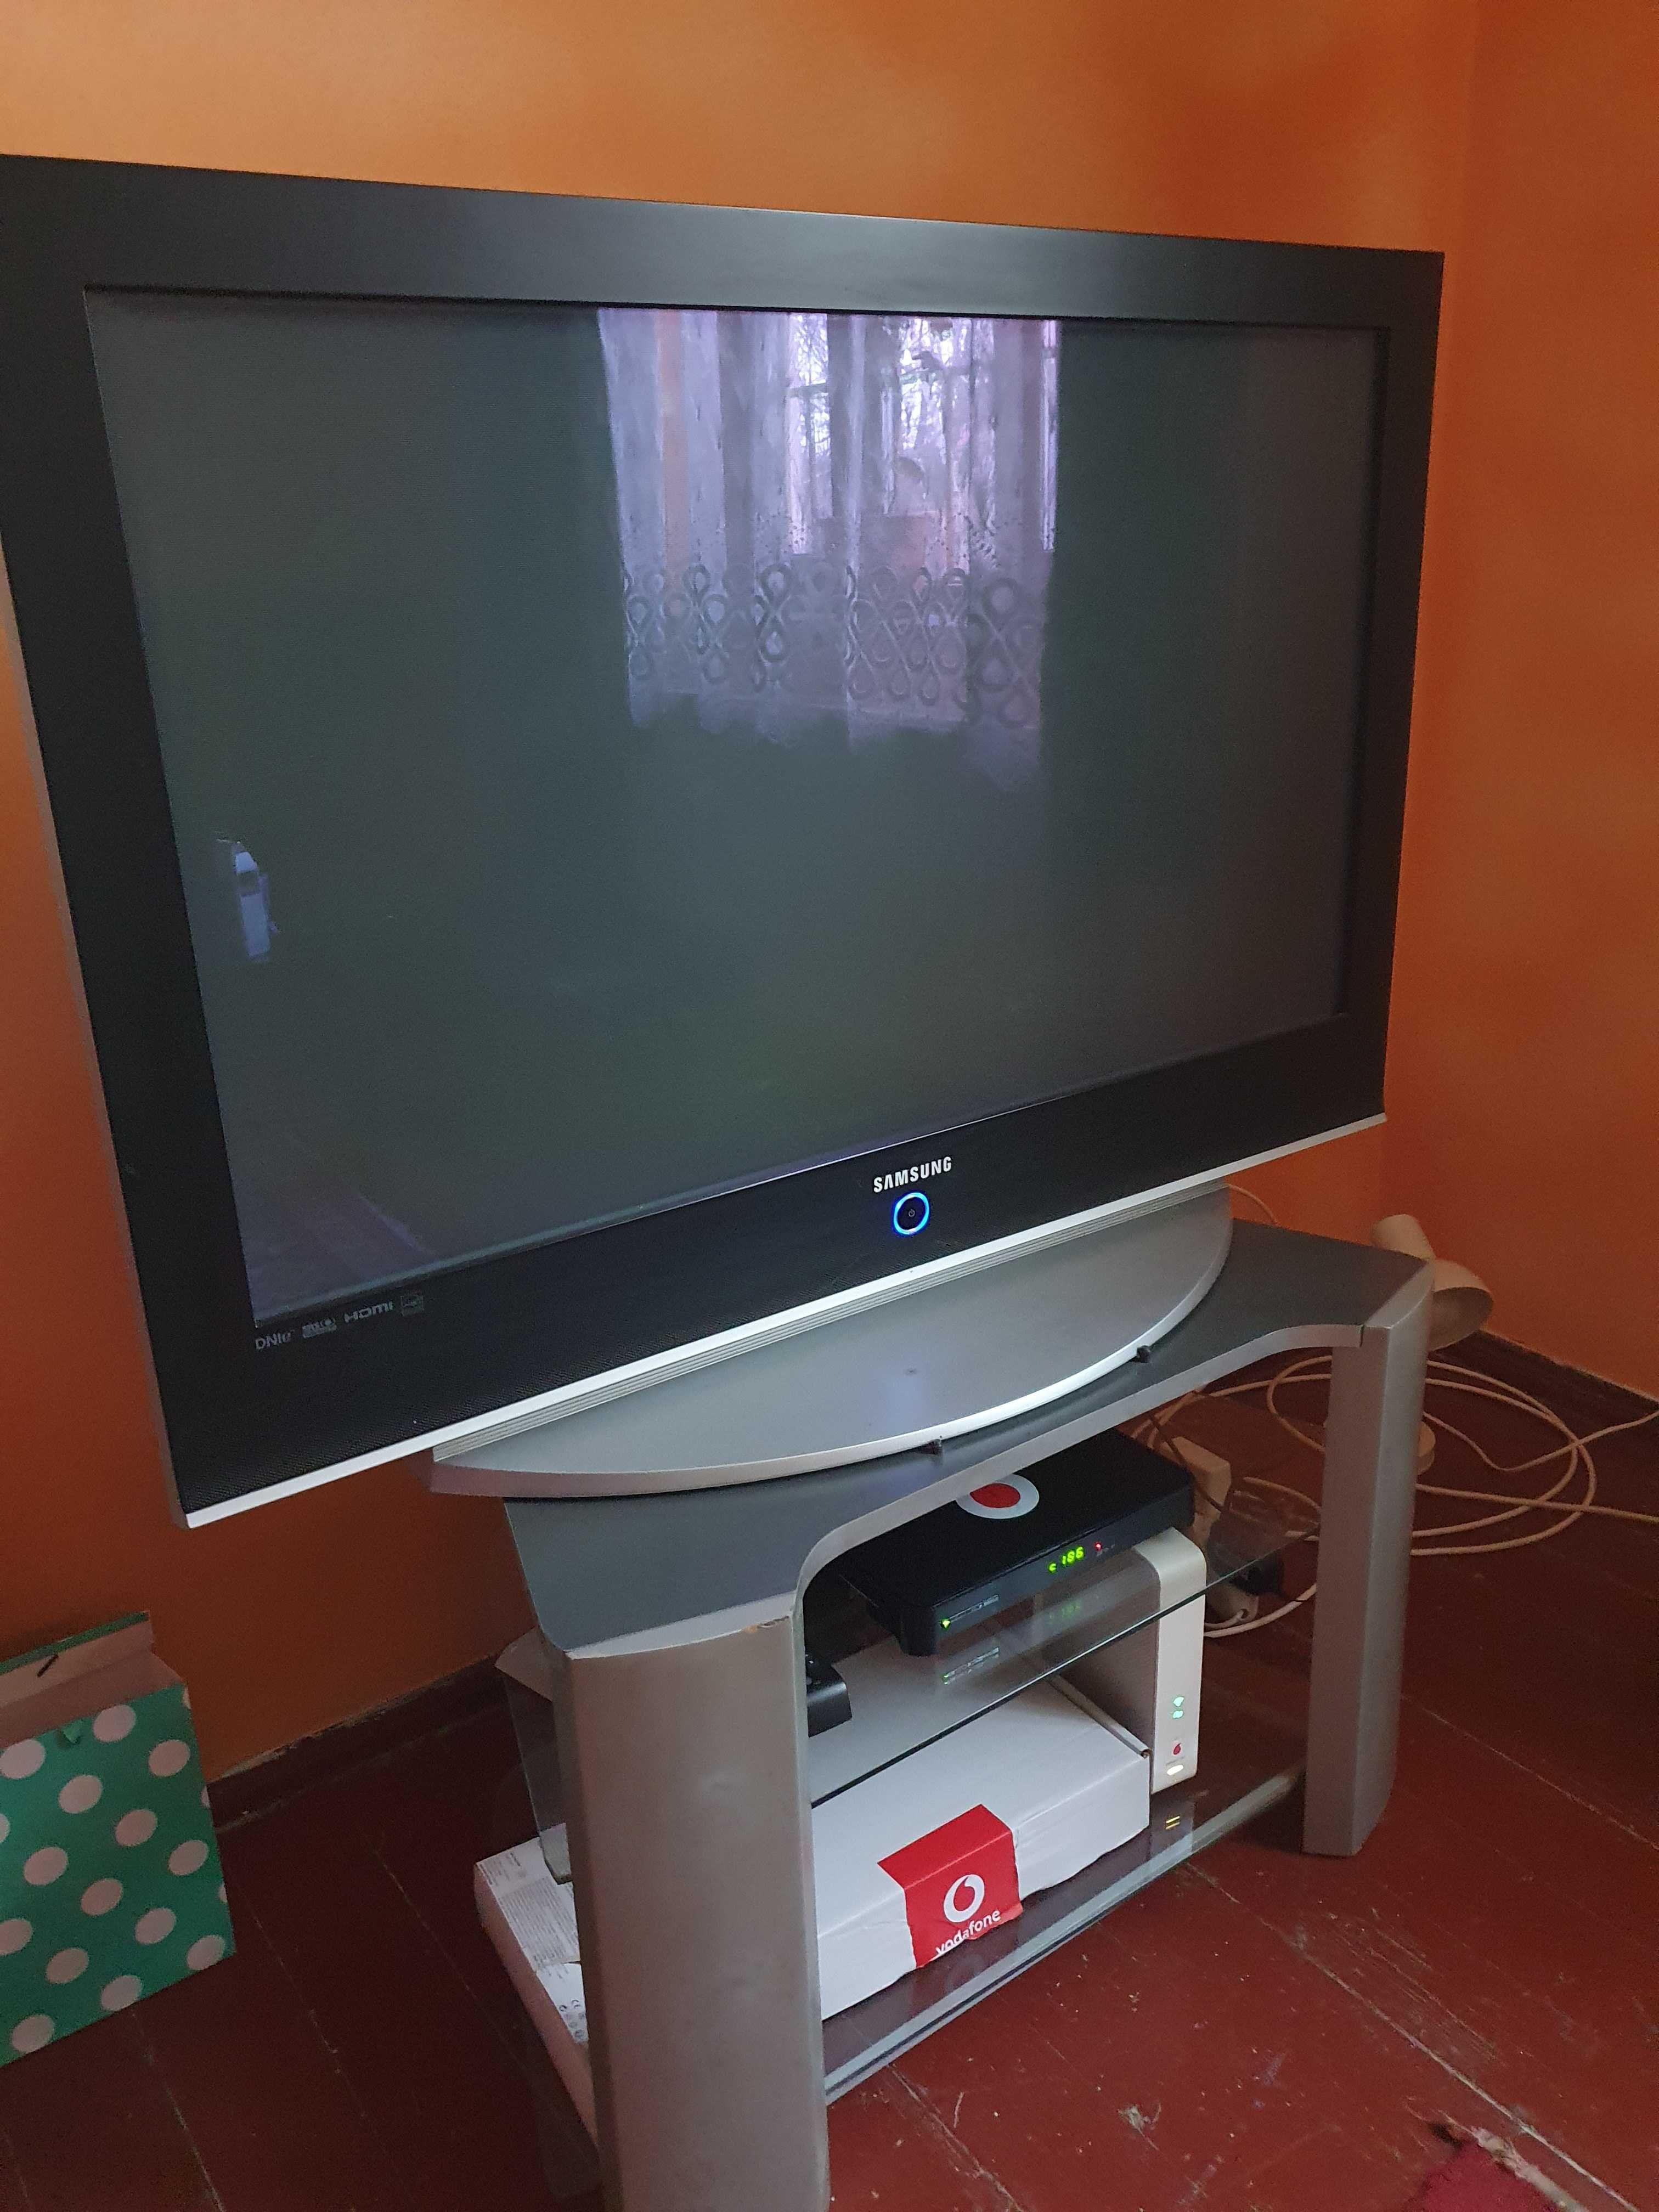 TV plasmă Samsung 106cm (PS-42C7S)